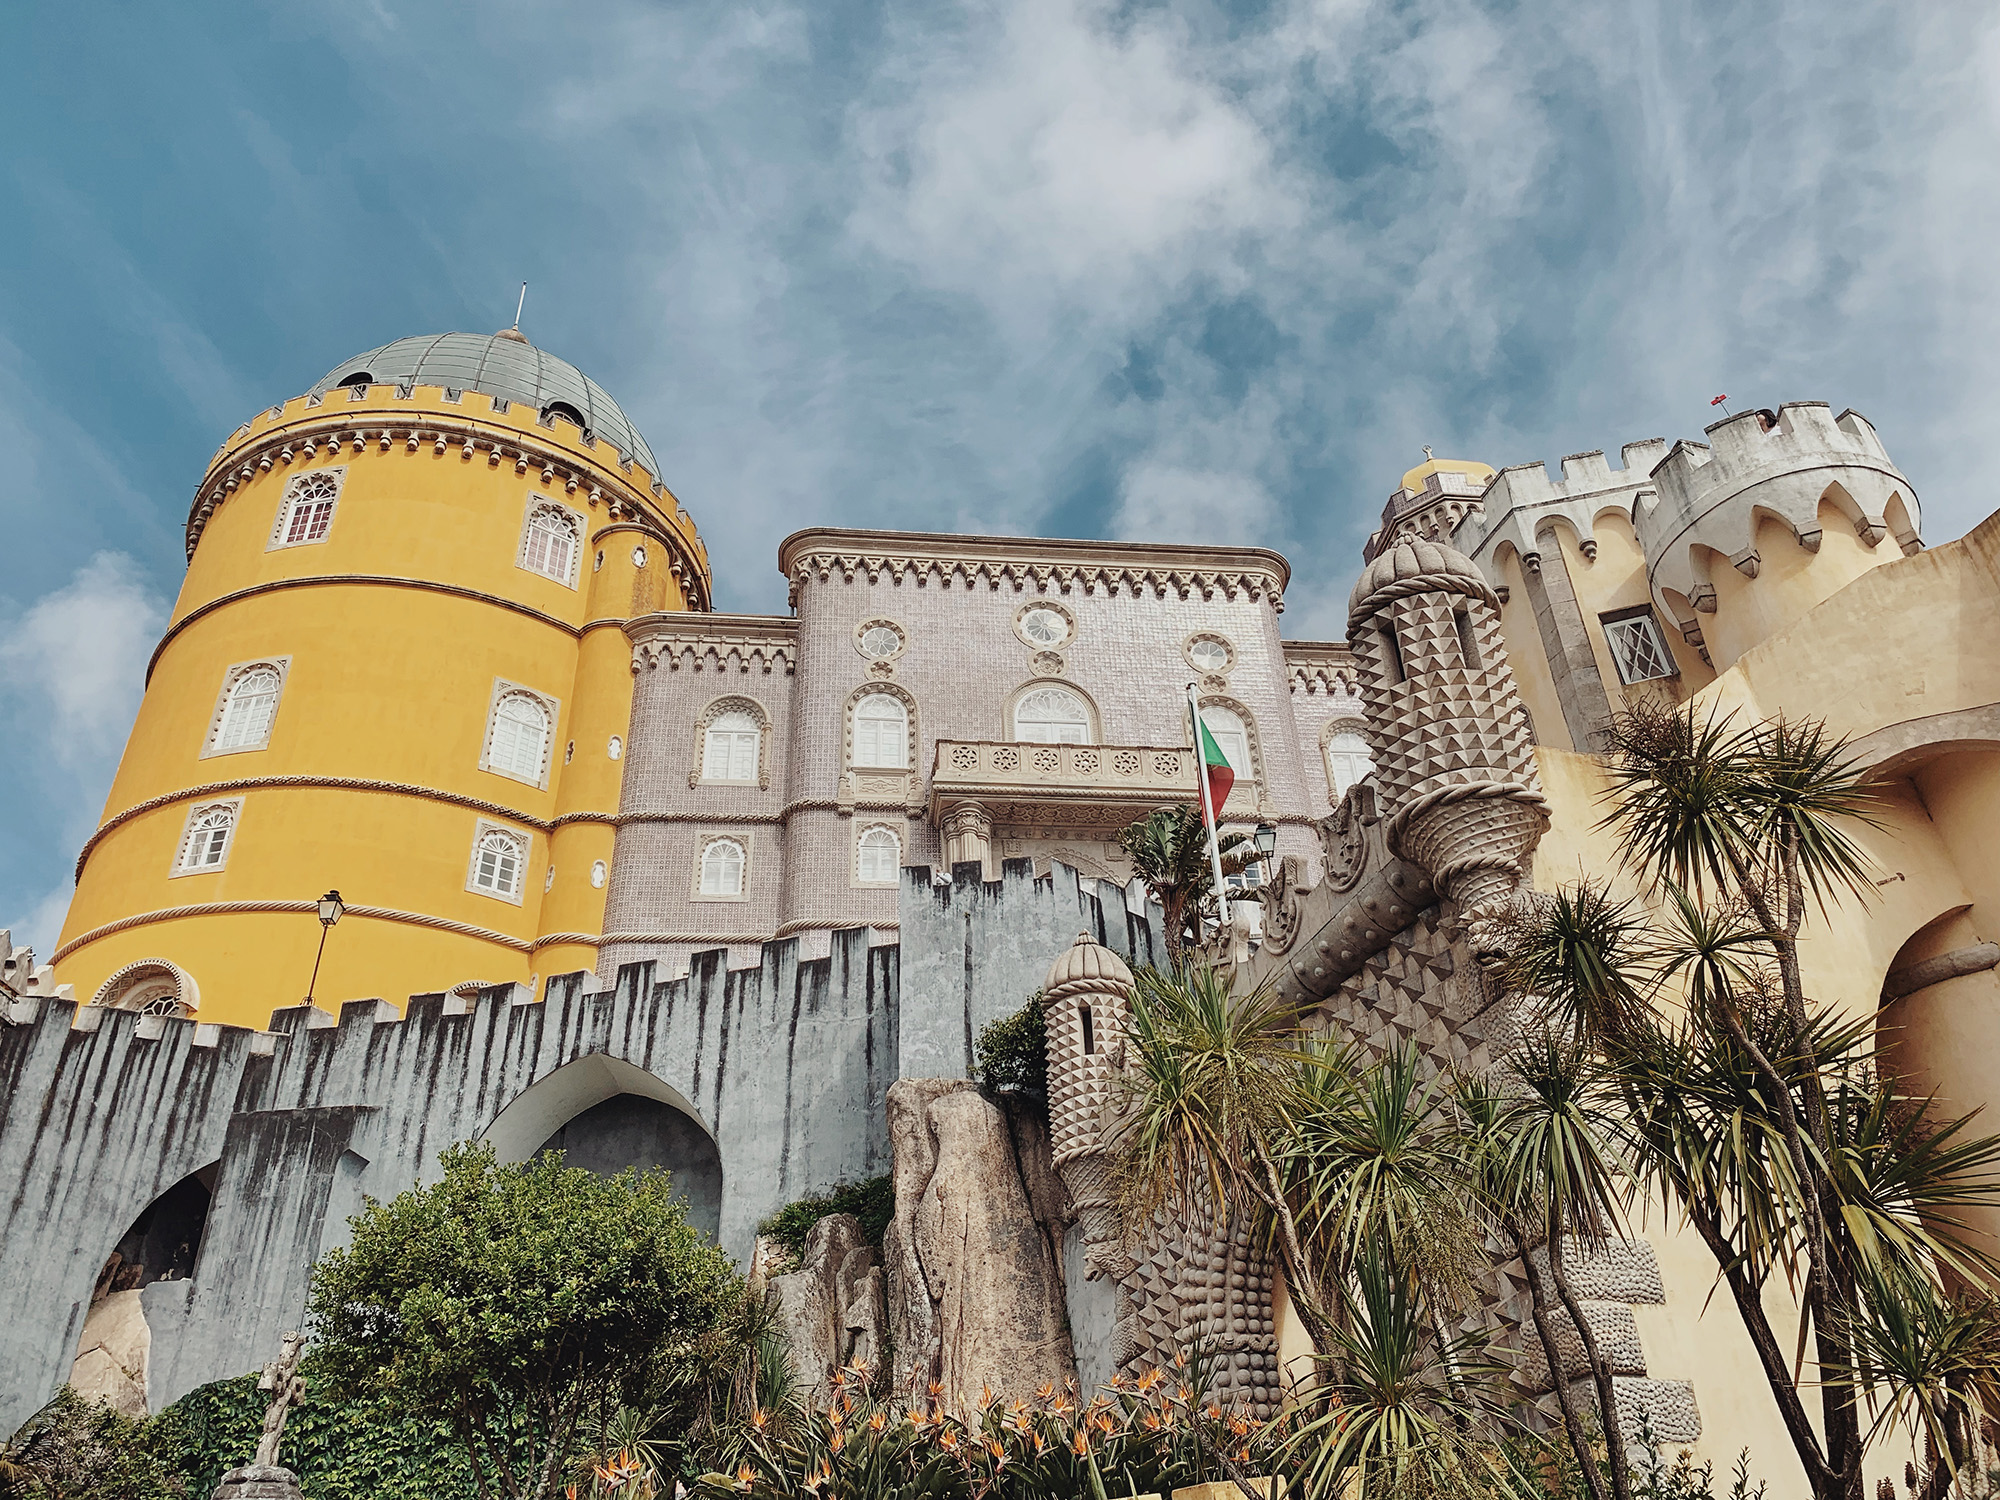 Sintra castles - Palacio da Pena